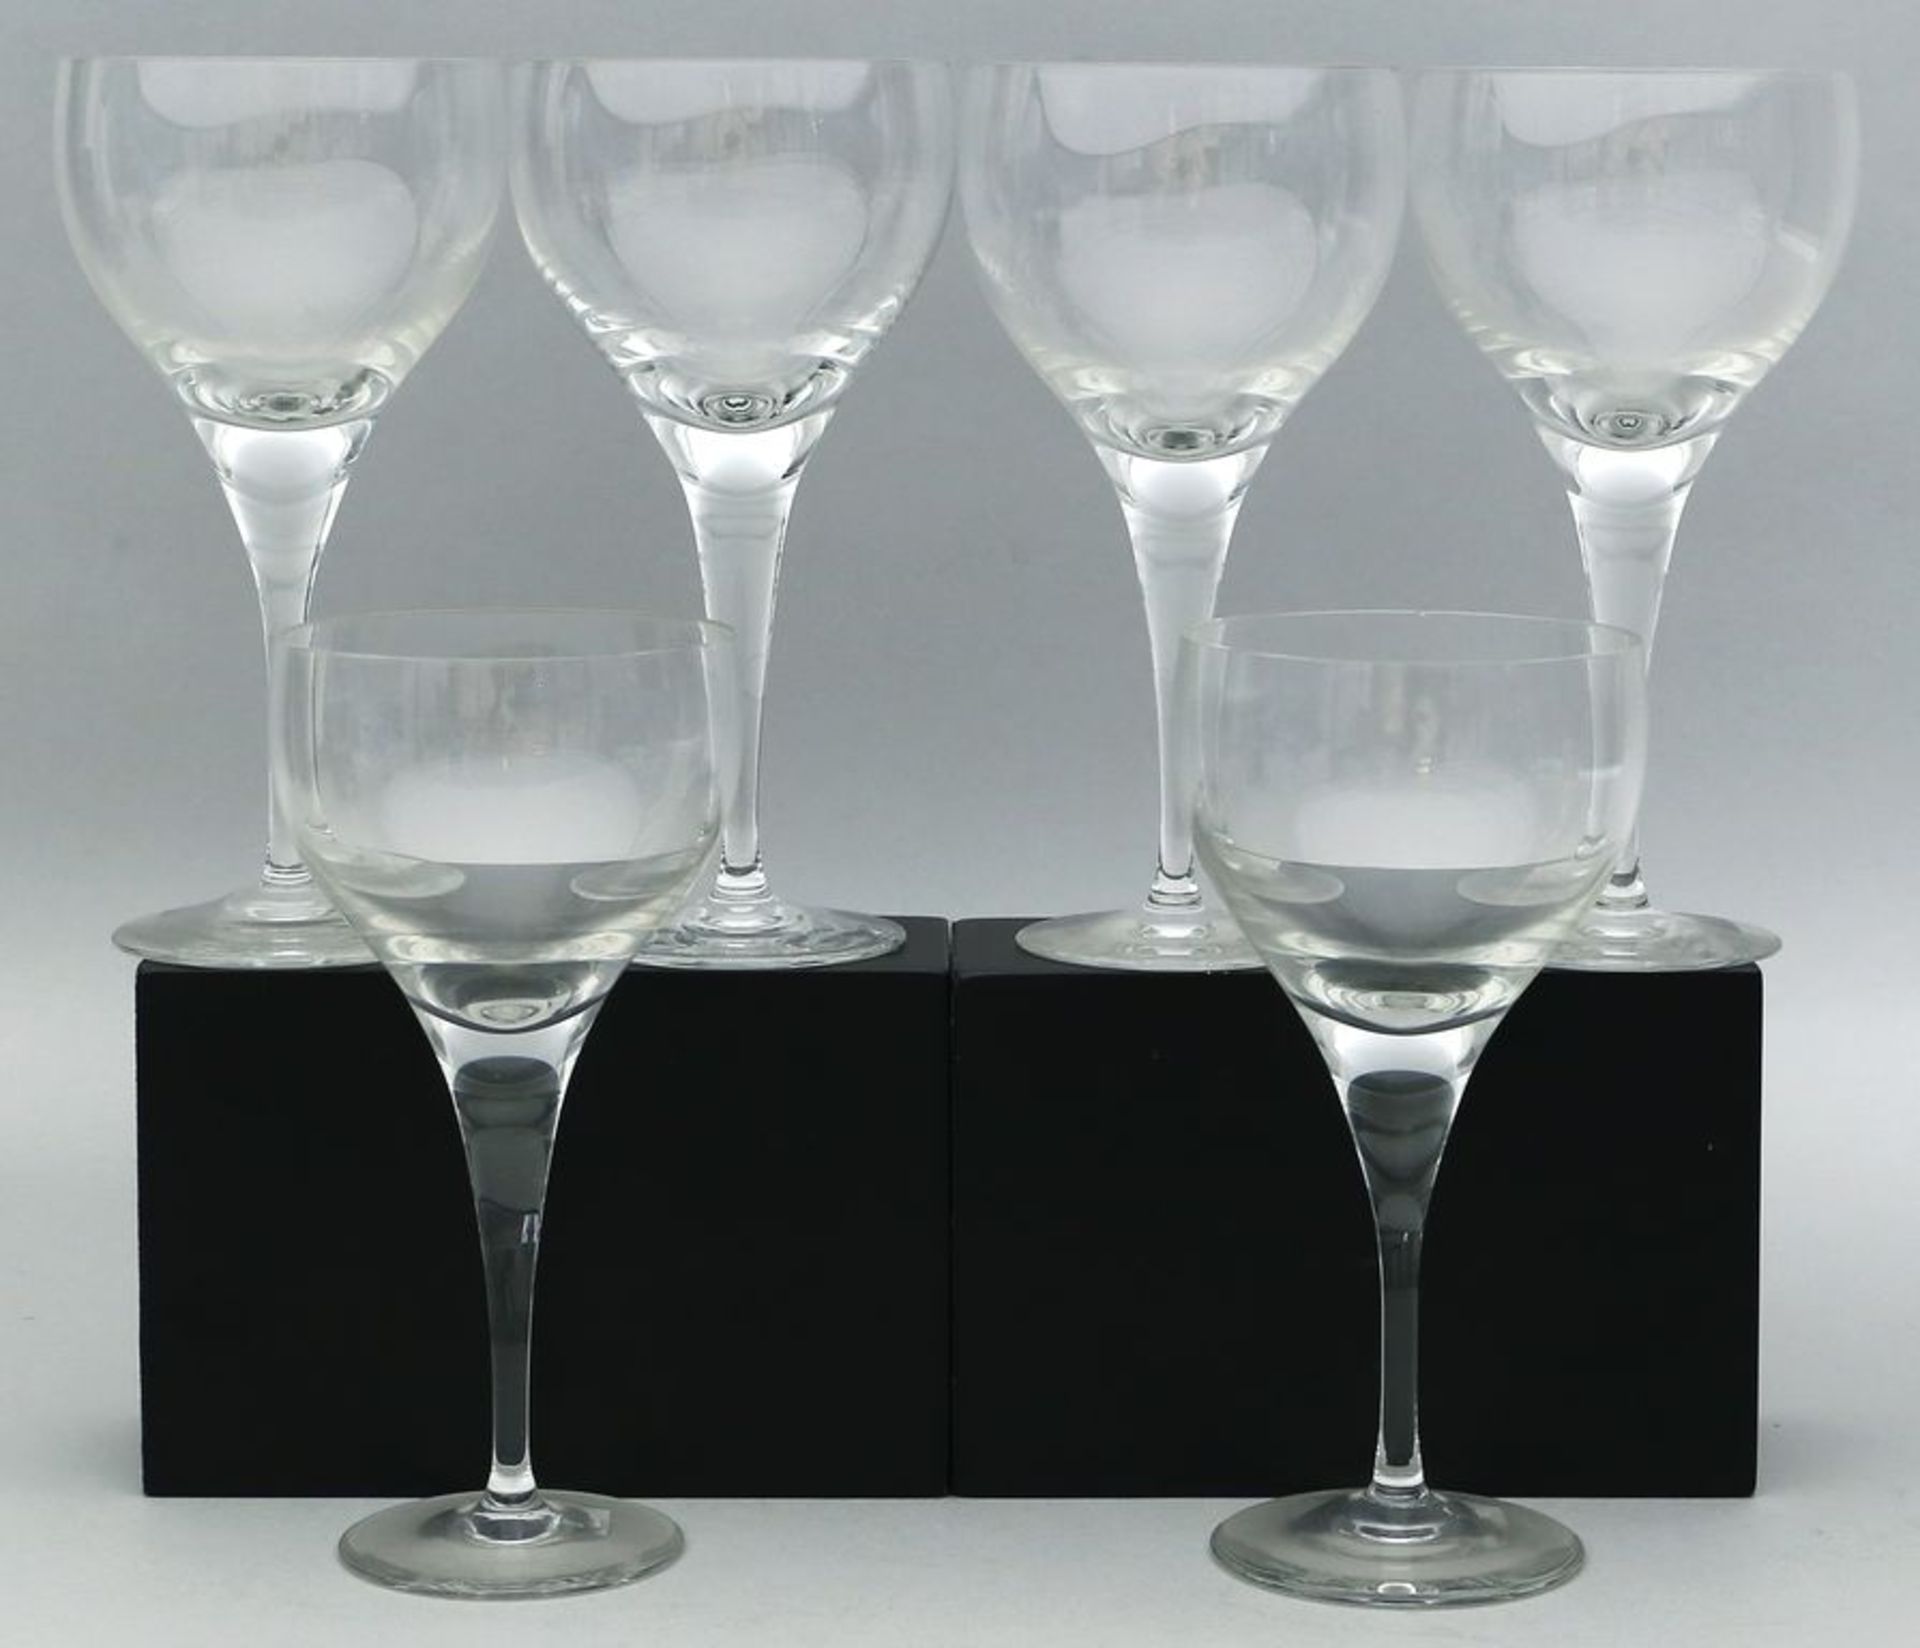 6 Weingläser, Rosenthal. "Lotus". Farbloses Glas. Rosenthal, studio-linie, 20. Jh. H. 17 cm.